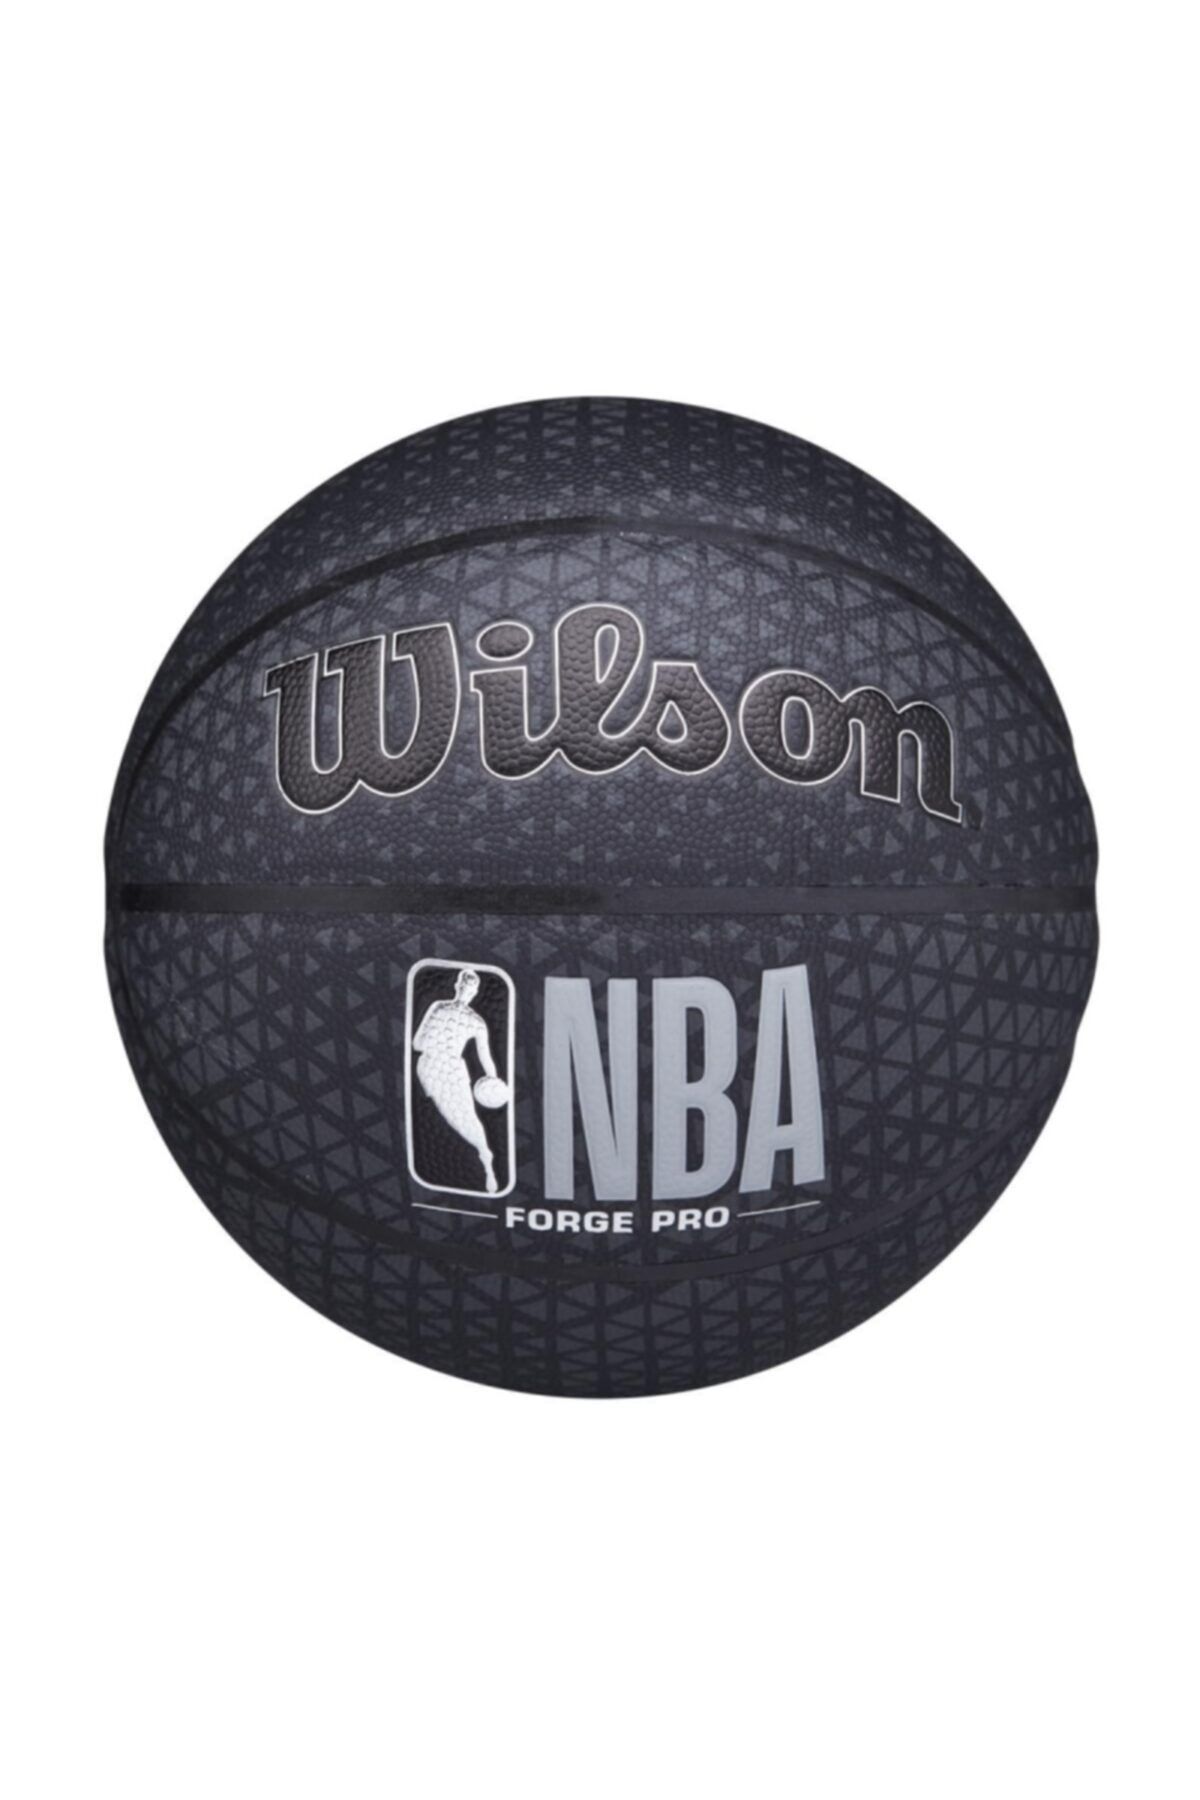 Wilson Nba Forge Printed Basketbol Topu 7 Numara Size 7 Wtb8001xb07